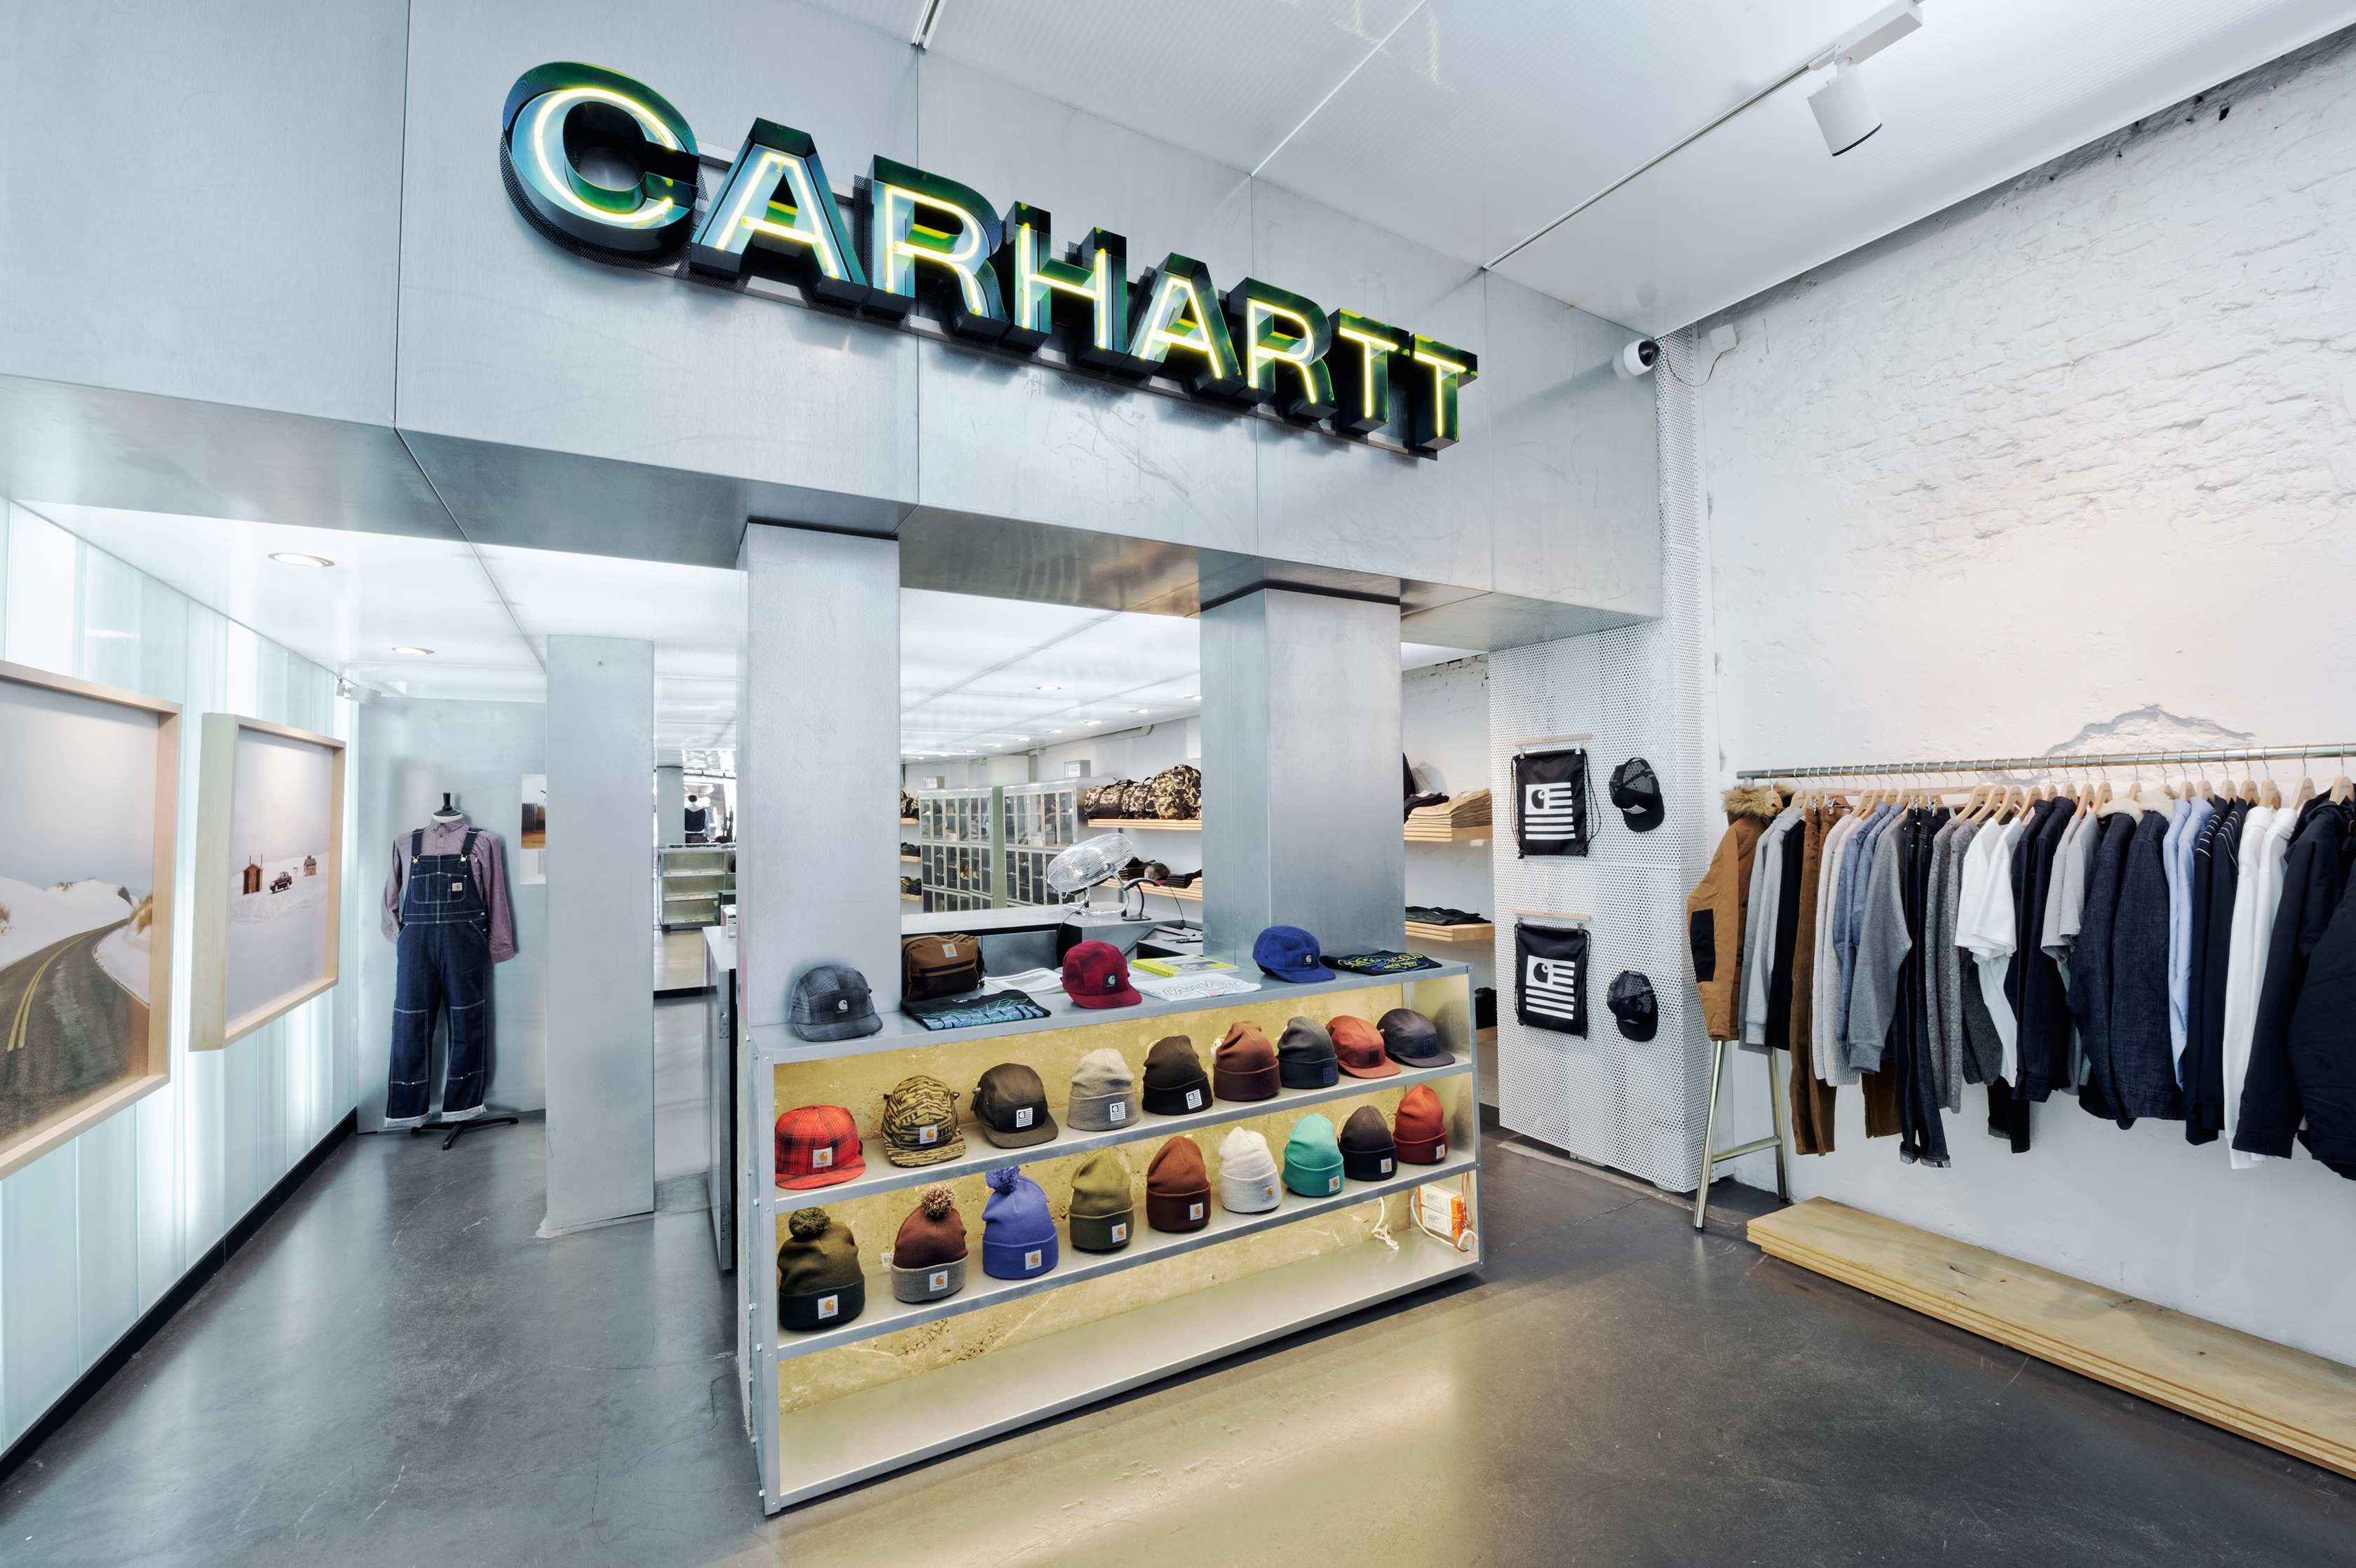 Carhartt Work in Progress. From workwear to streetwear. | by Craig Berry |  Medium